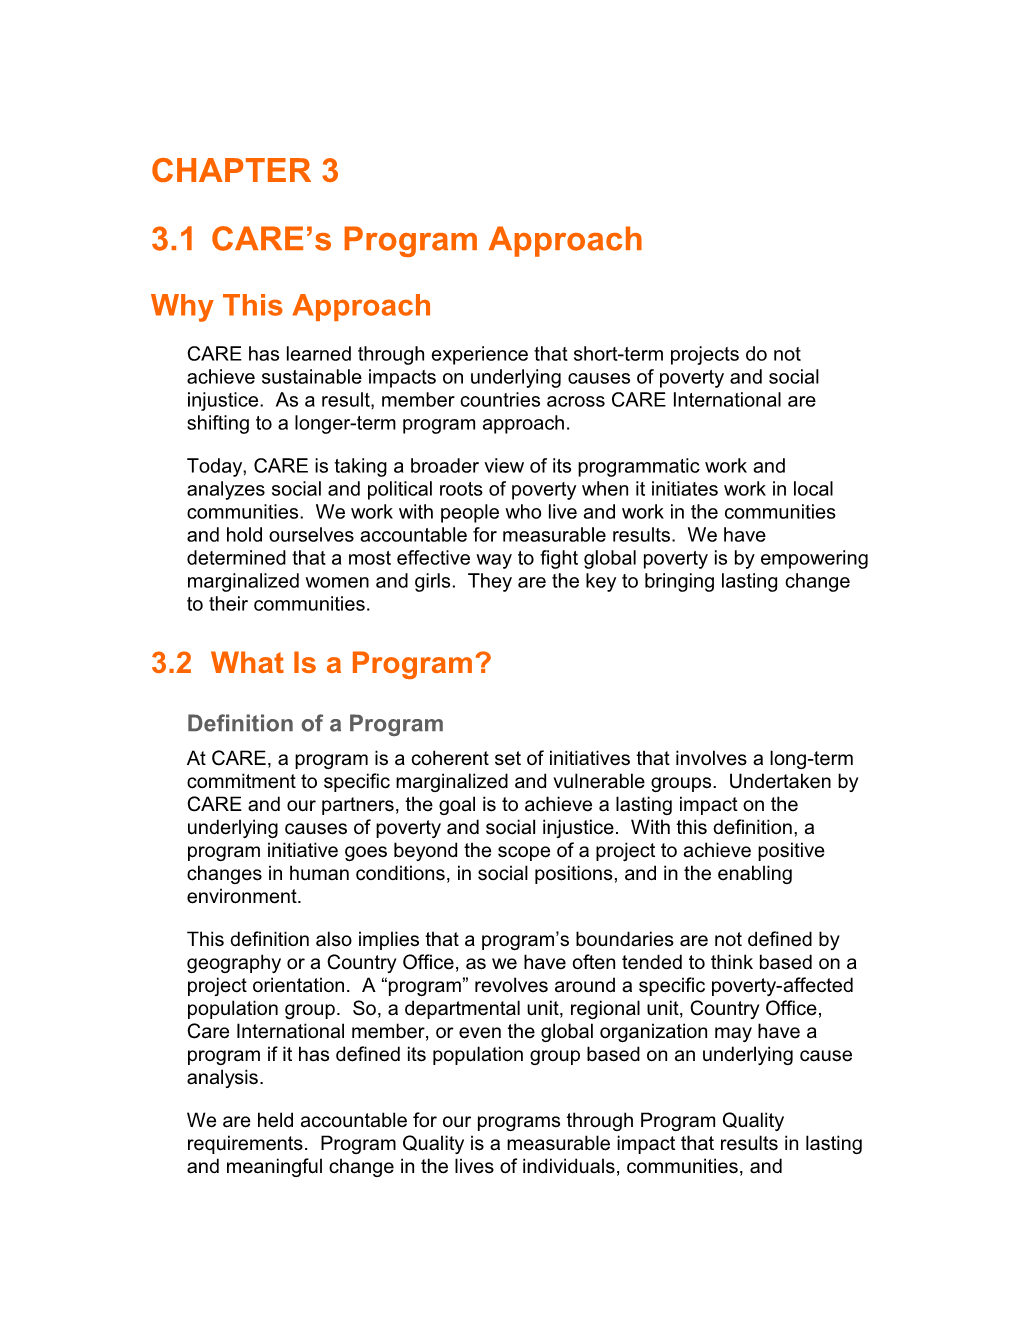 CARE S Program Approach